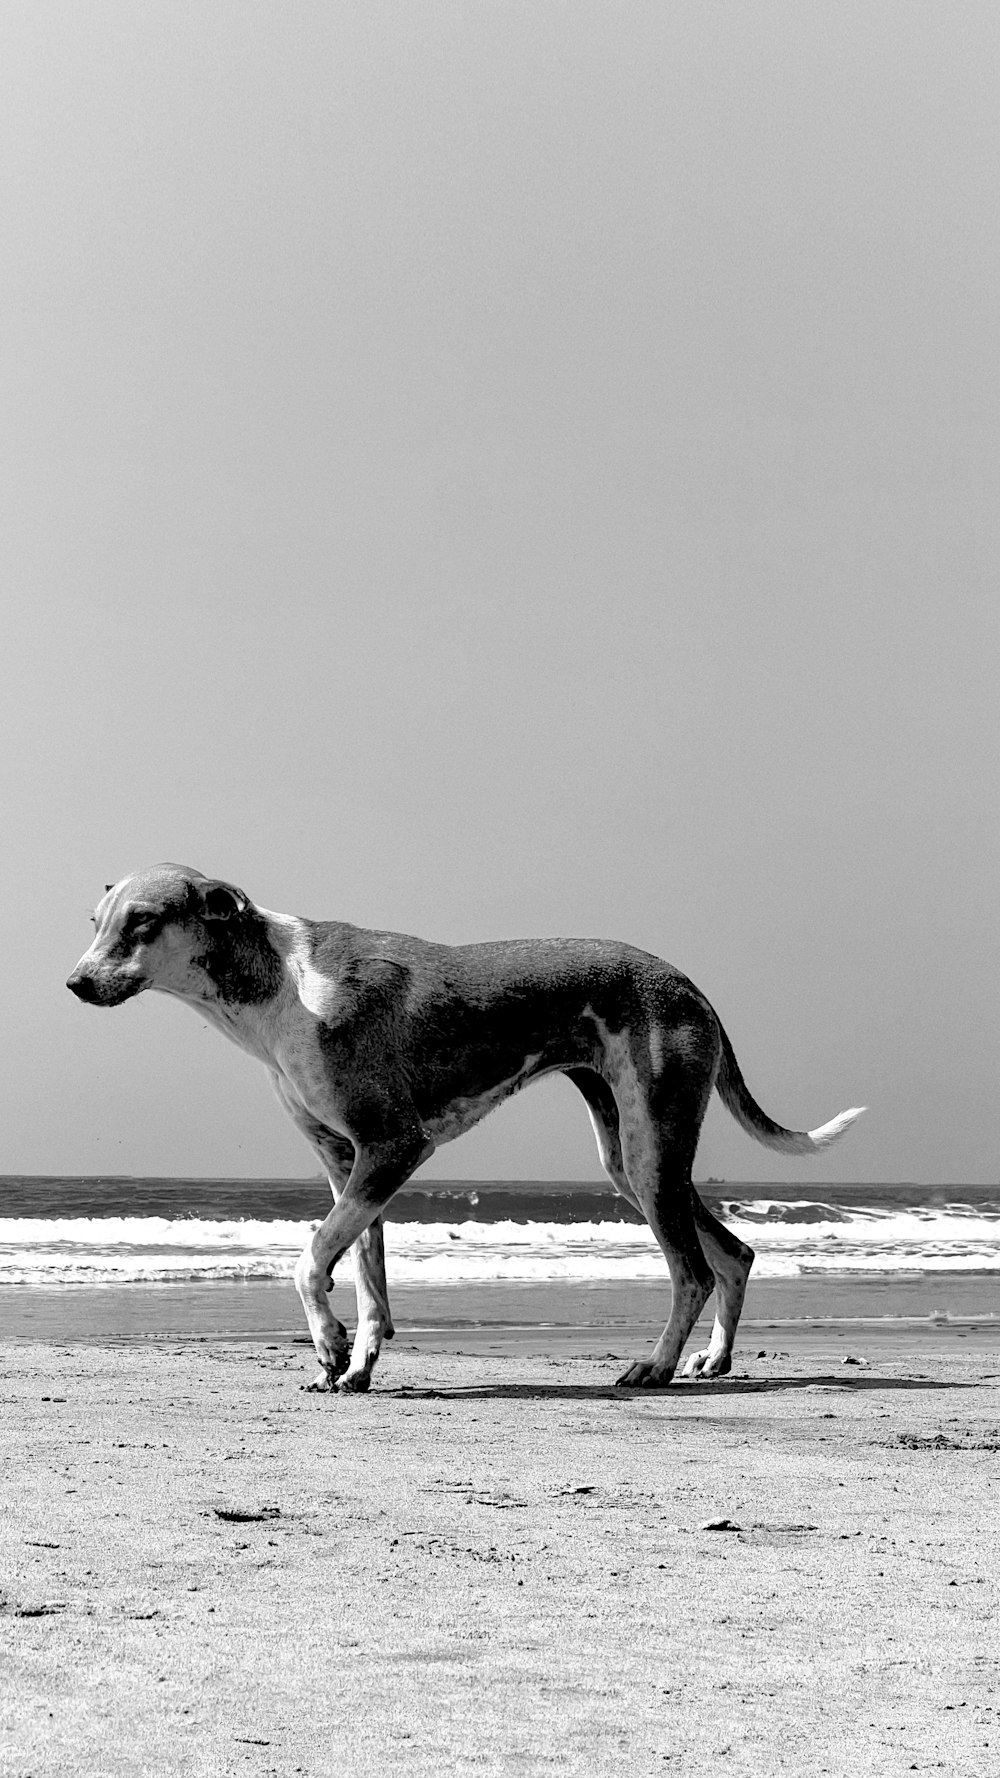 a dog walking across a beach next to the ocean